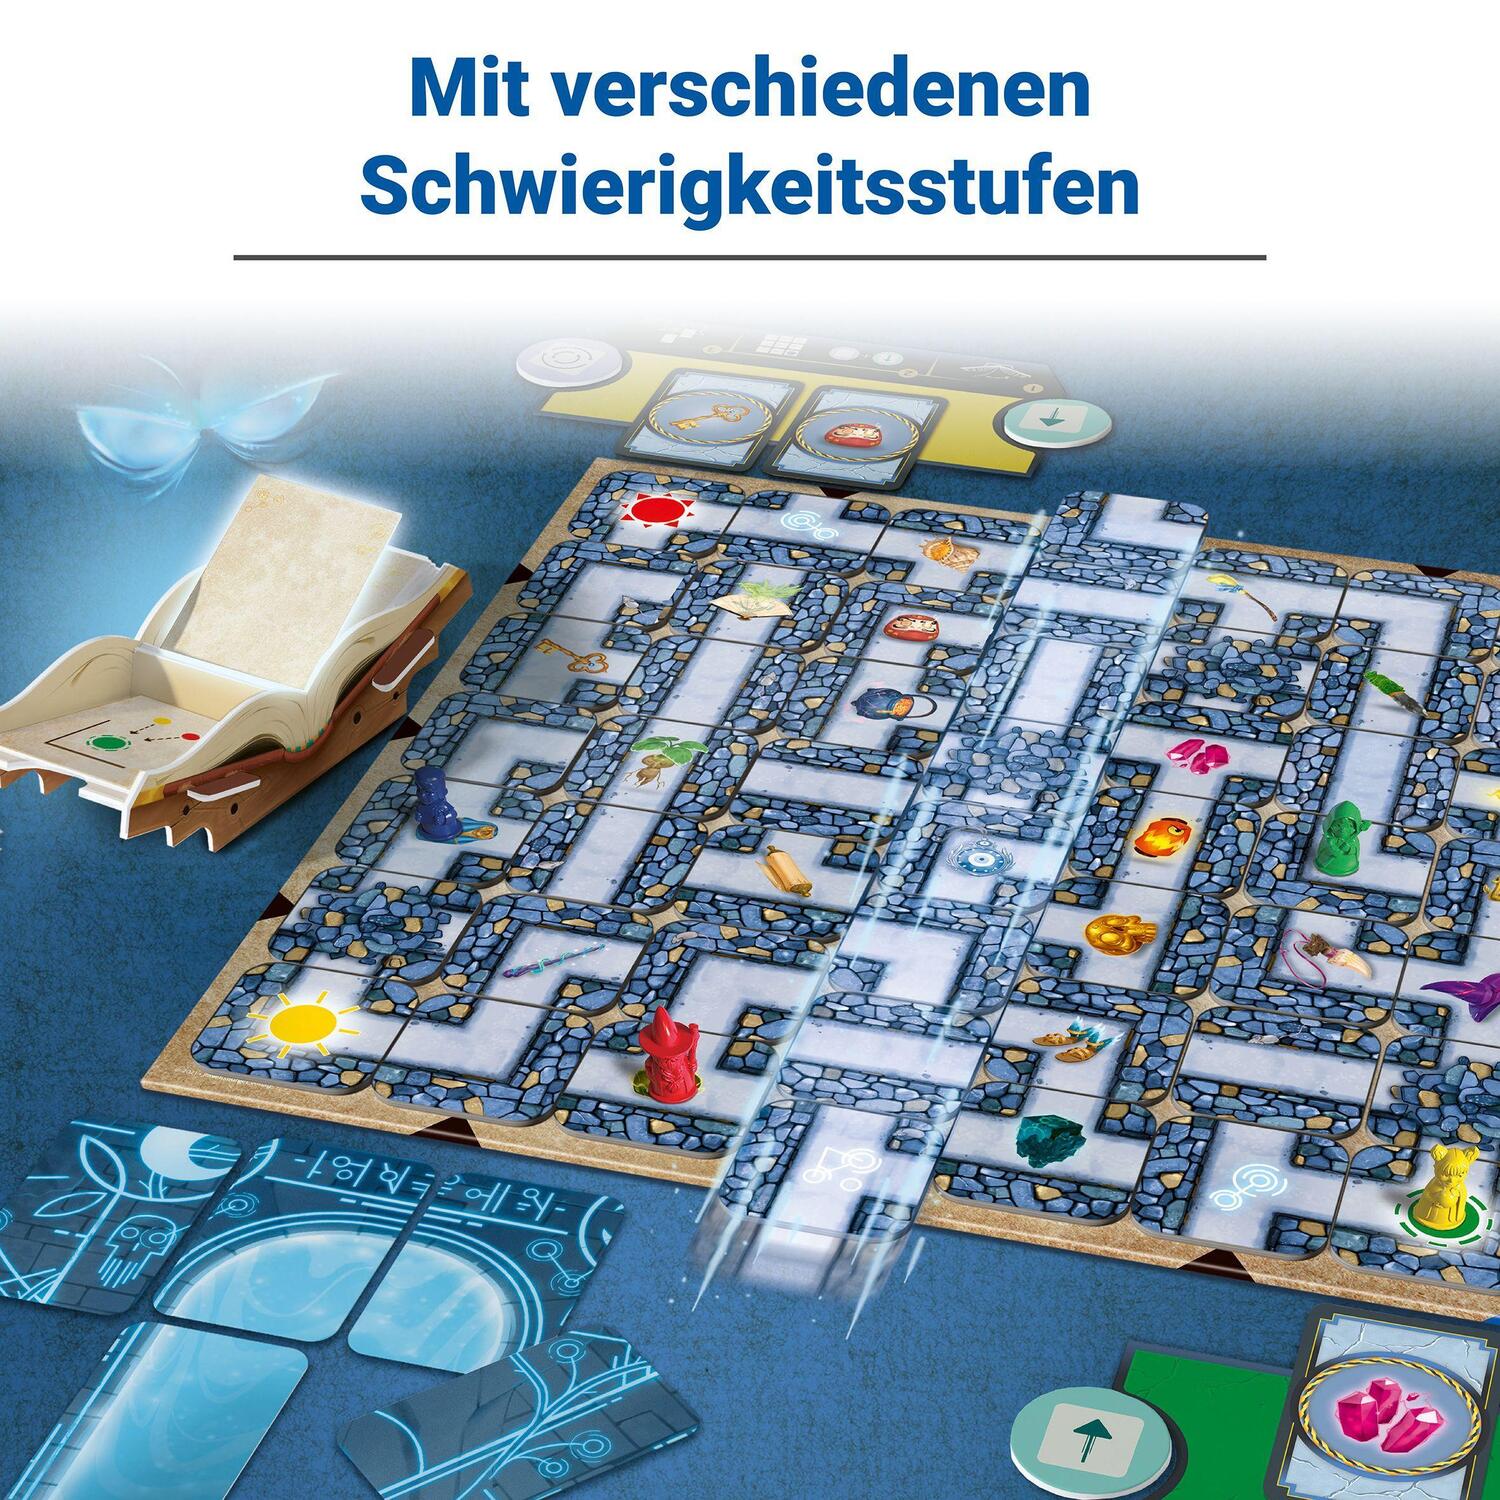 Bild: 4005556273287 | Ravensburger 27328 Labyrinth Team Edition- Die kooperative Variante...